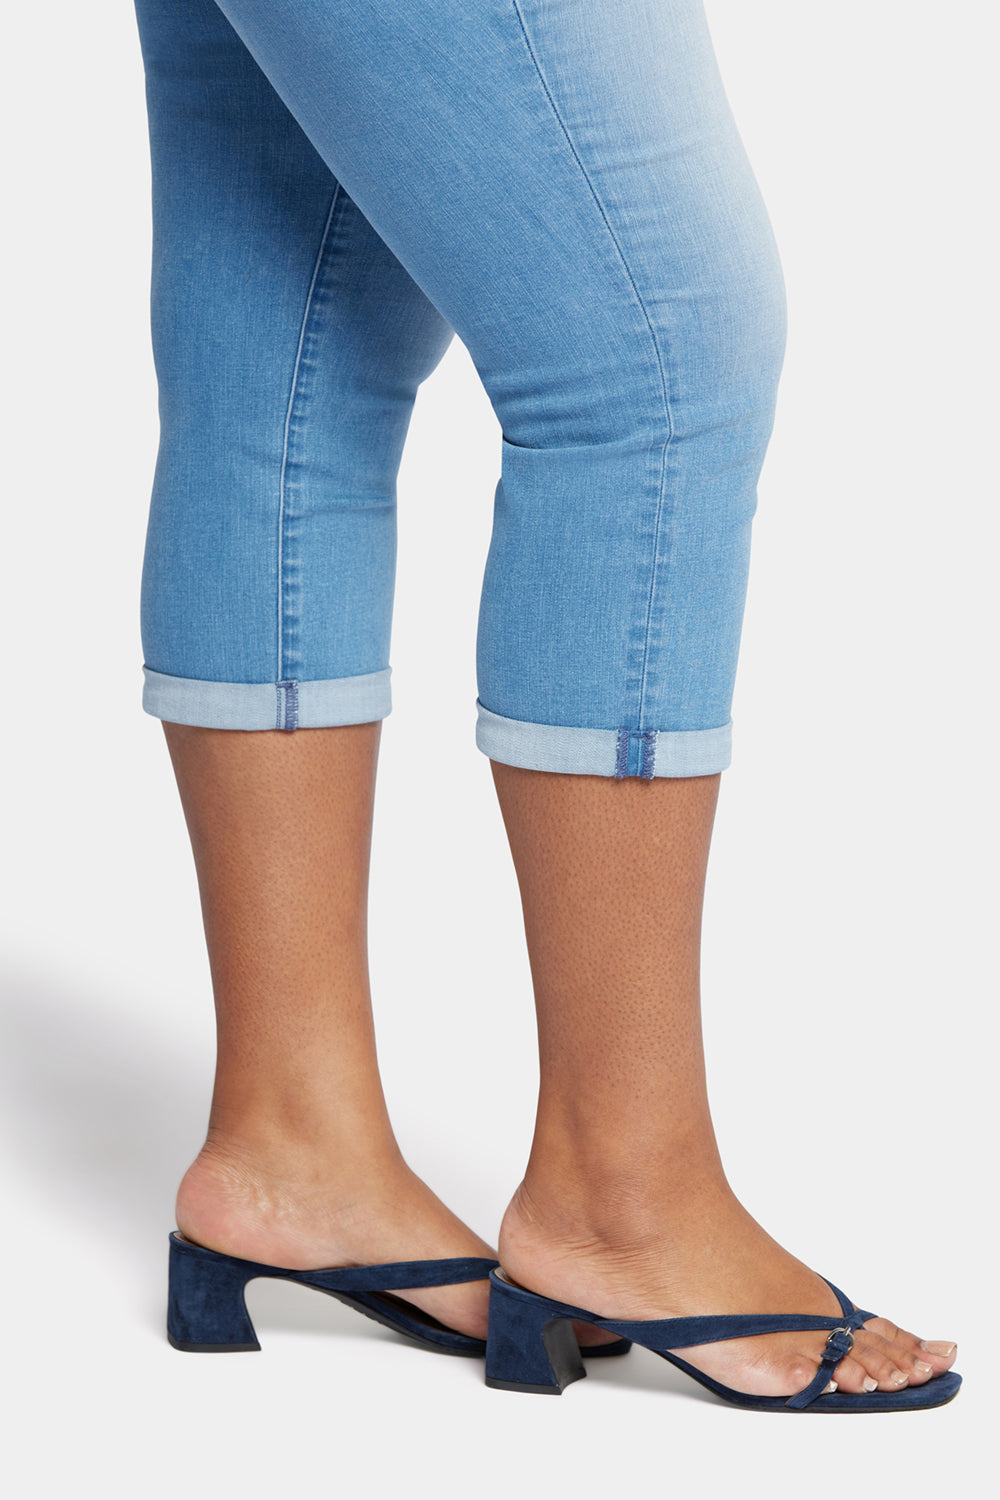 NYDJ Chloe Skinny Capri Jeans In Plus Size In Cool Embrace® Denim With Roll Cuffs - Debut